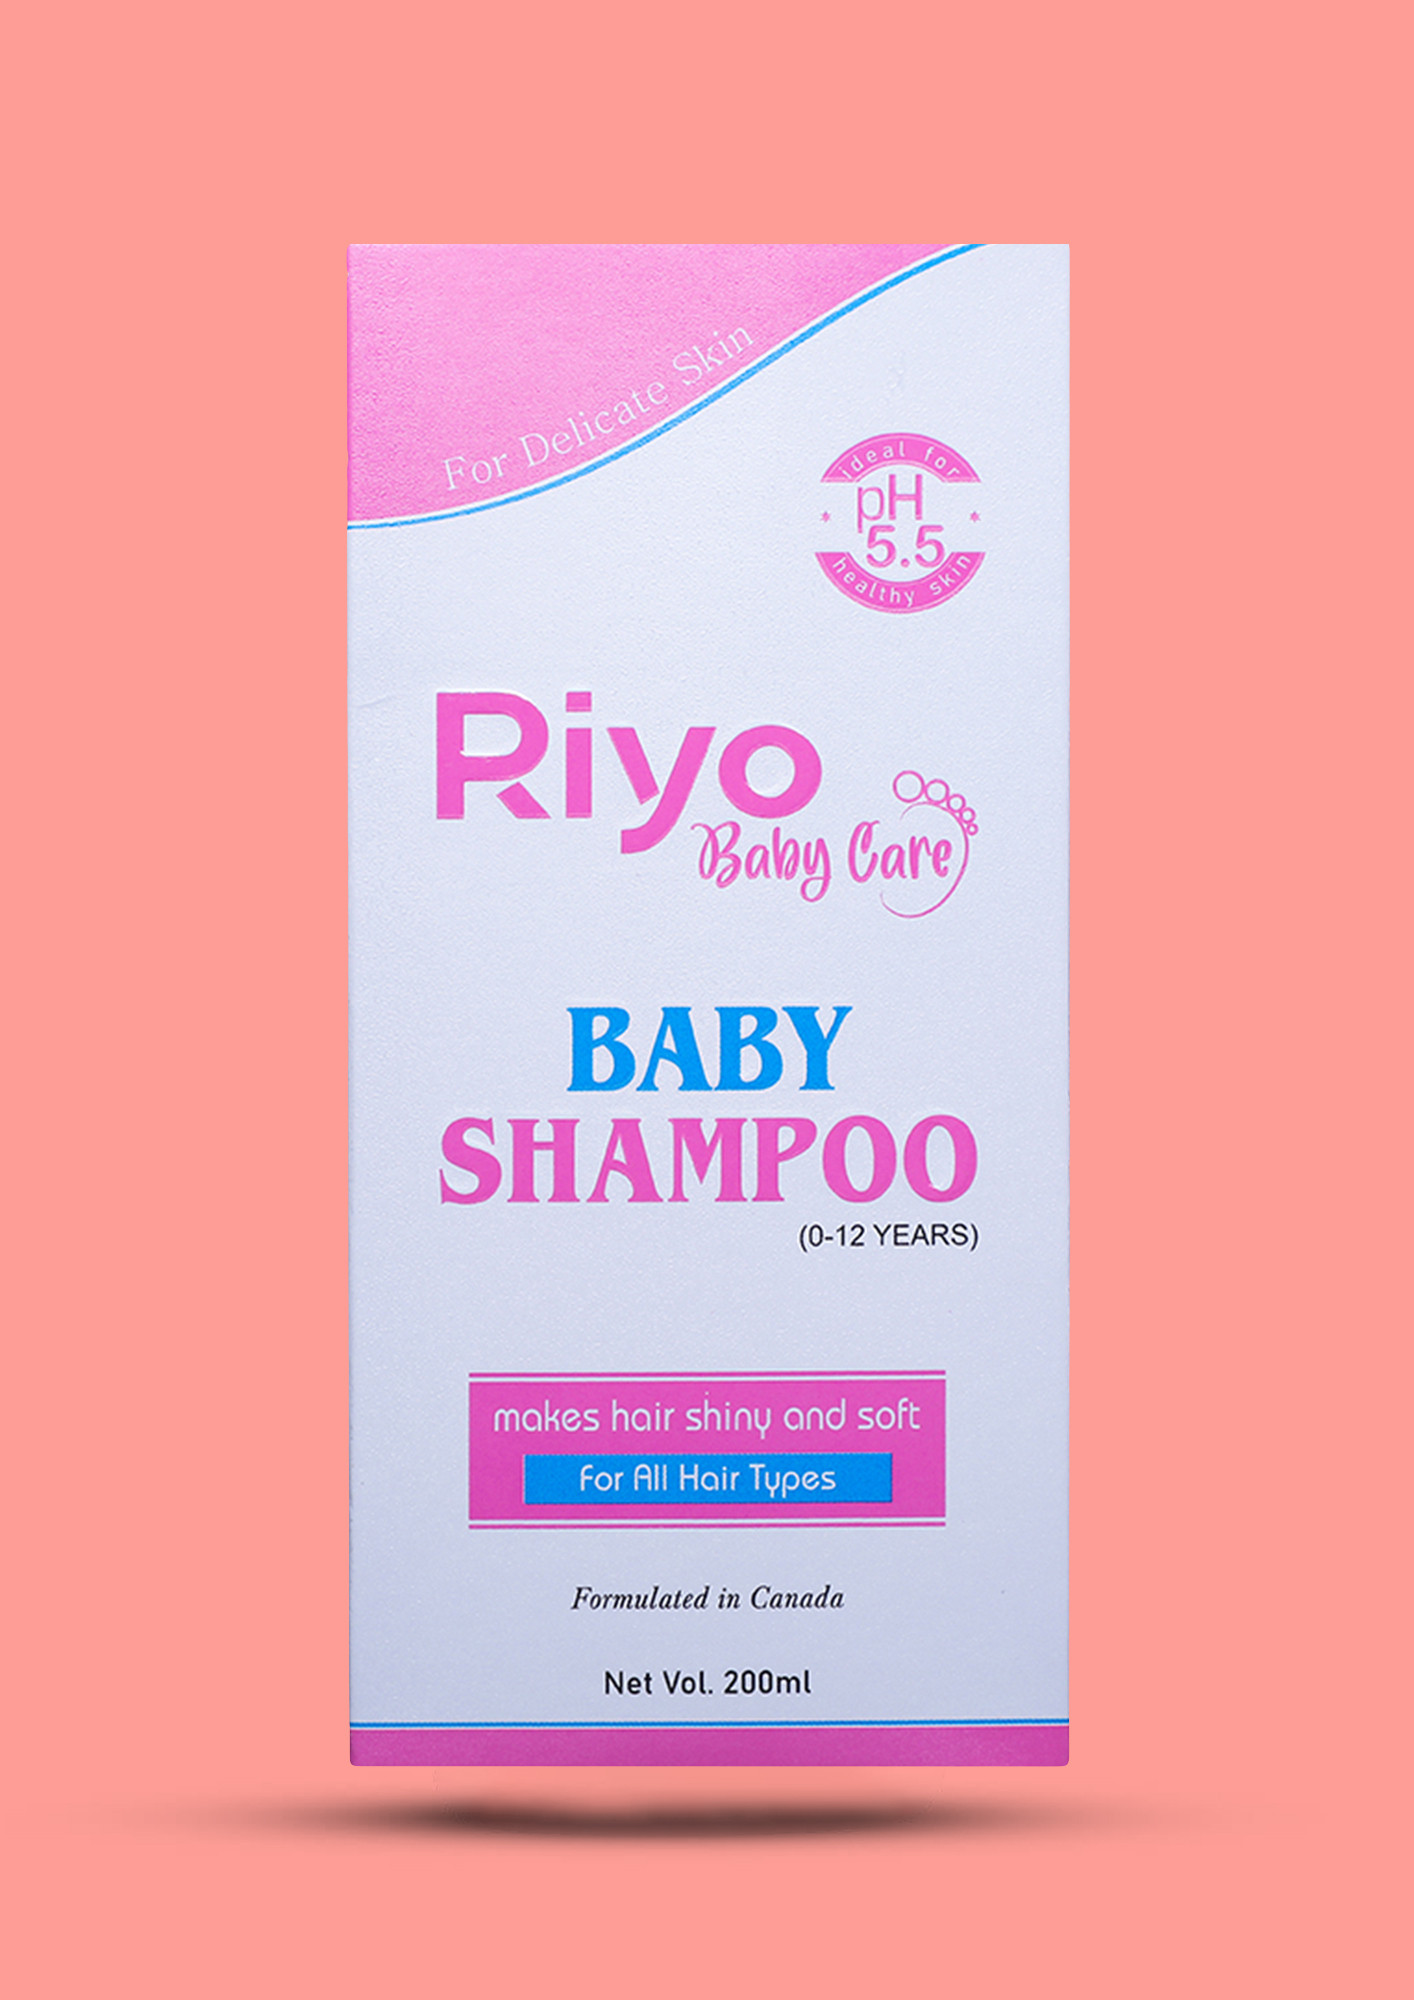 Riyo Baby Shampoo for all hair types makes hair shiny and soft, 200ml